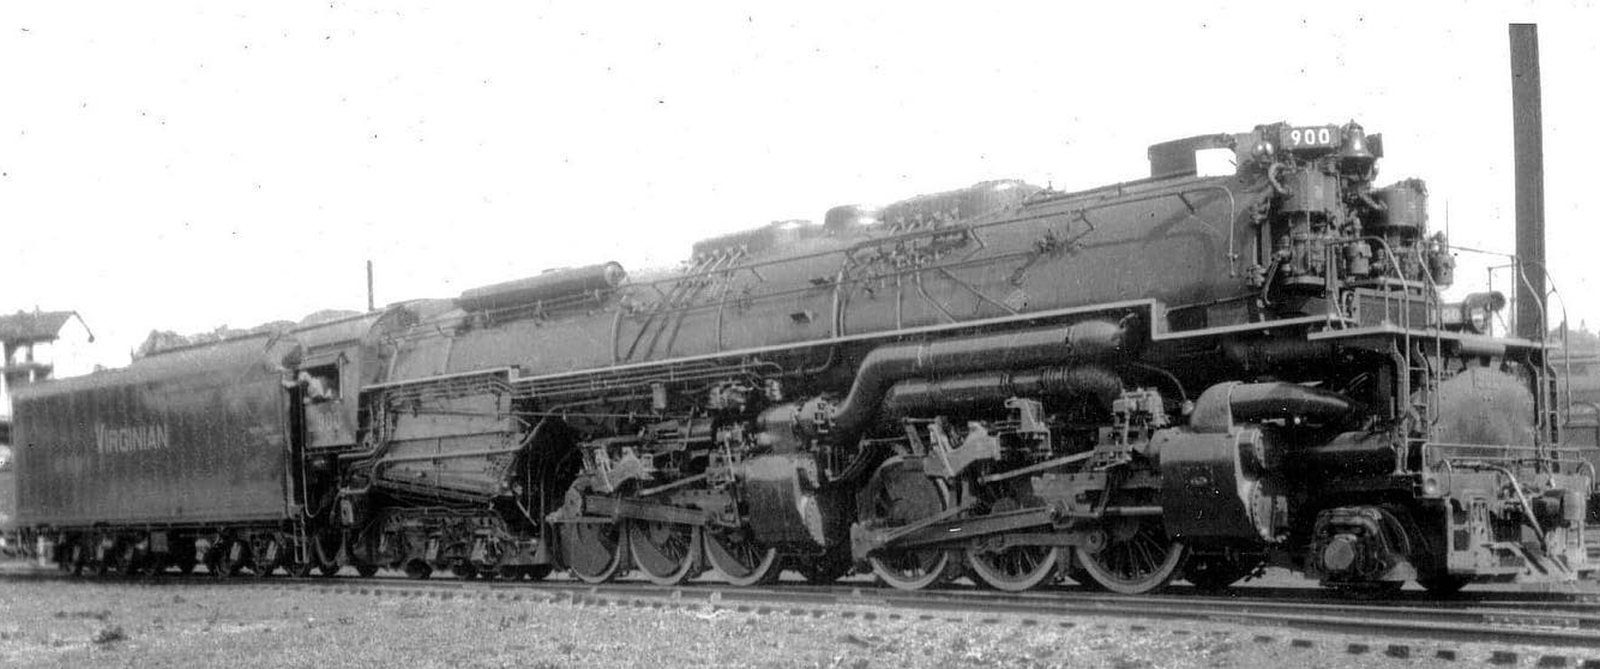 No. 900 in May 1946 in Roanoke, Virginia